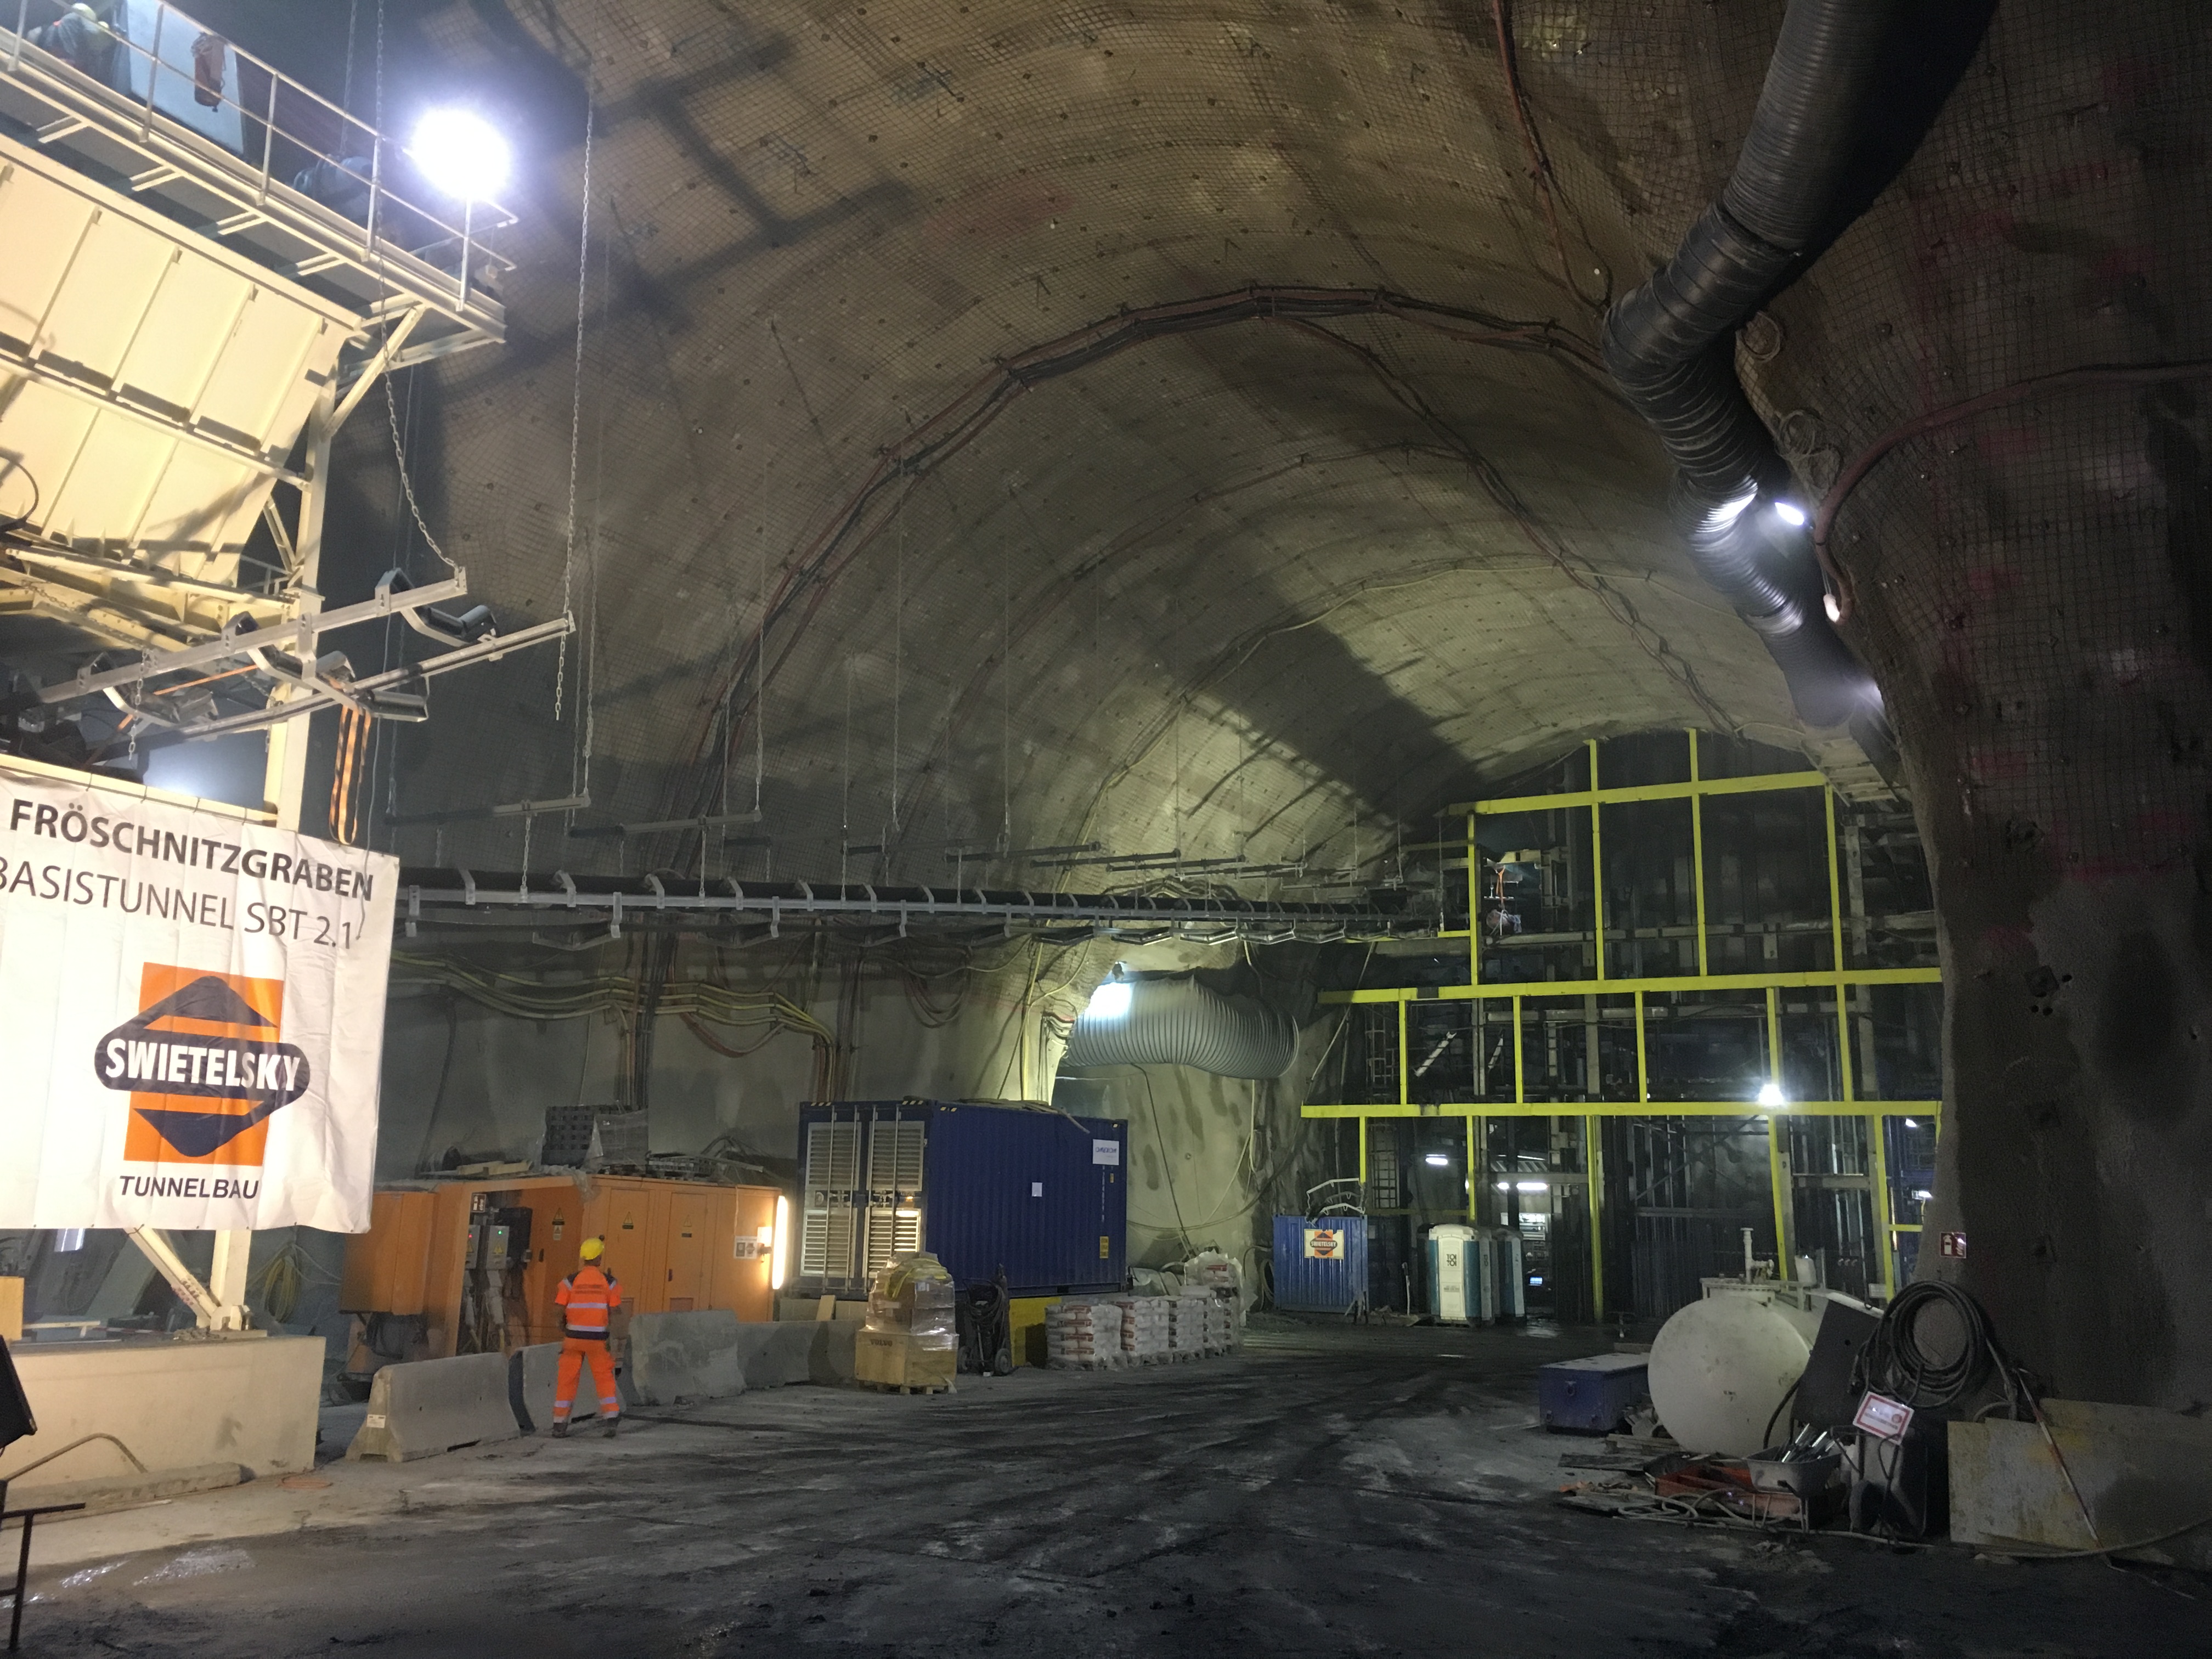 Semmering Basistunnel - SBT 2.1 Fröschnitzgraben - Budowa tuneli